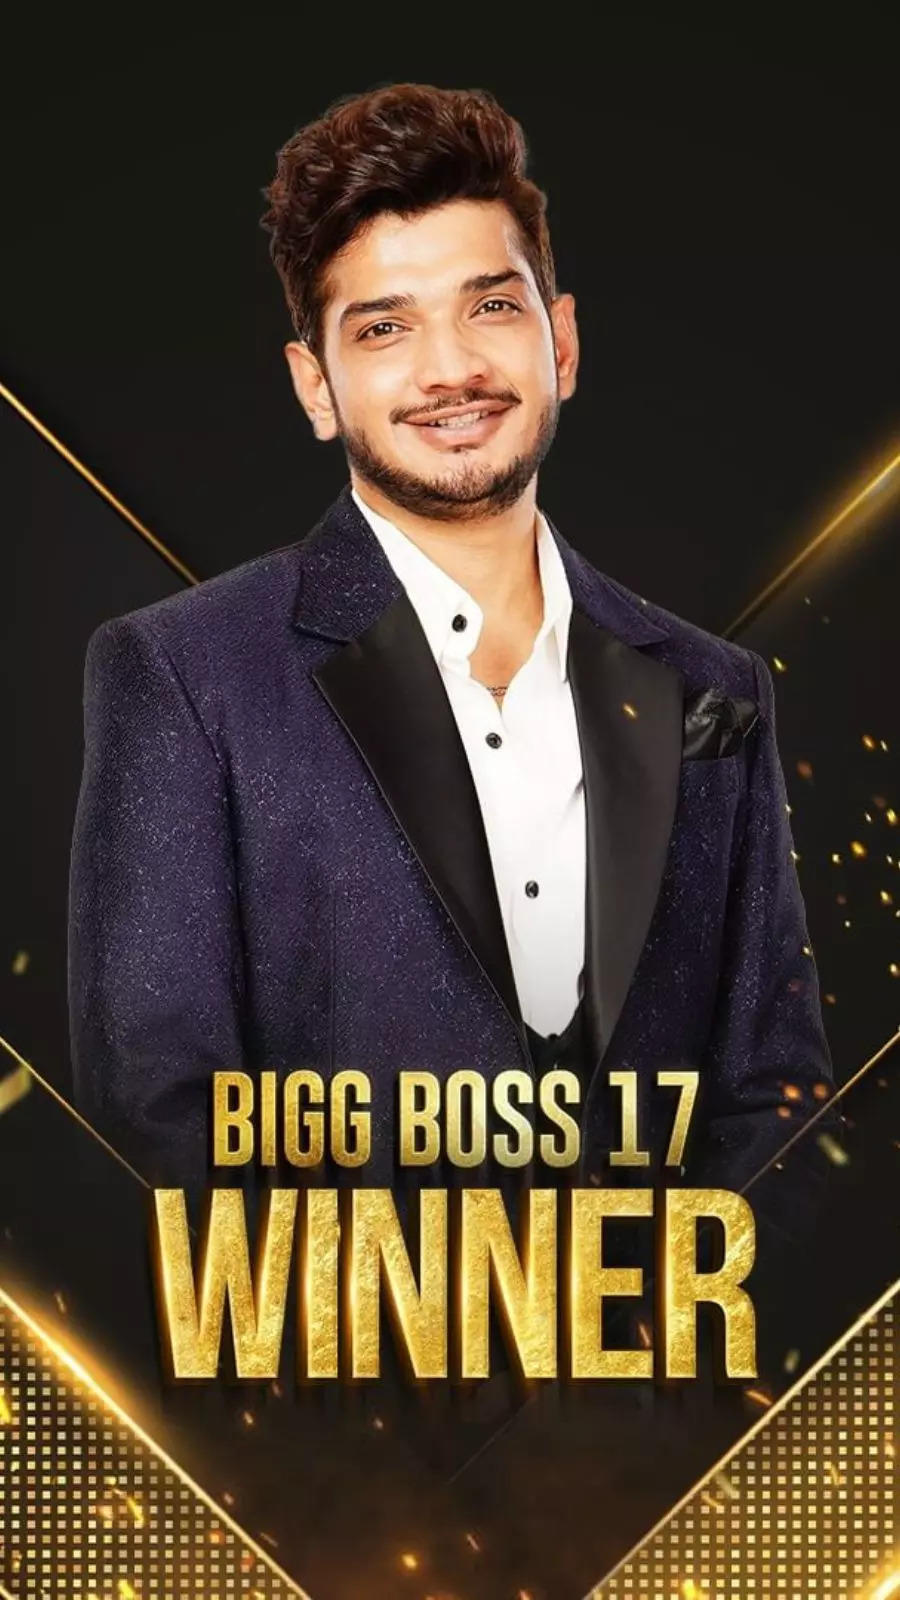 Bigg Boss 17 winner prize money and other rewards for Munawar Faruqui